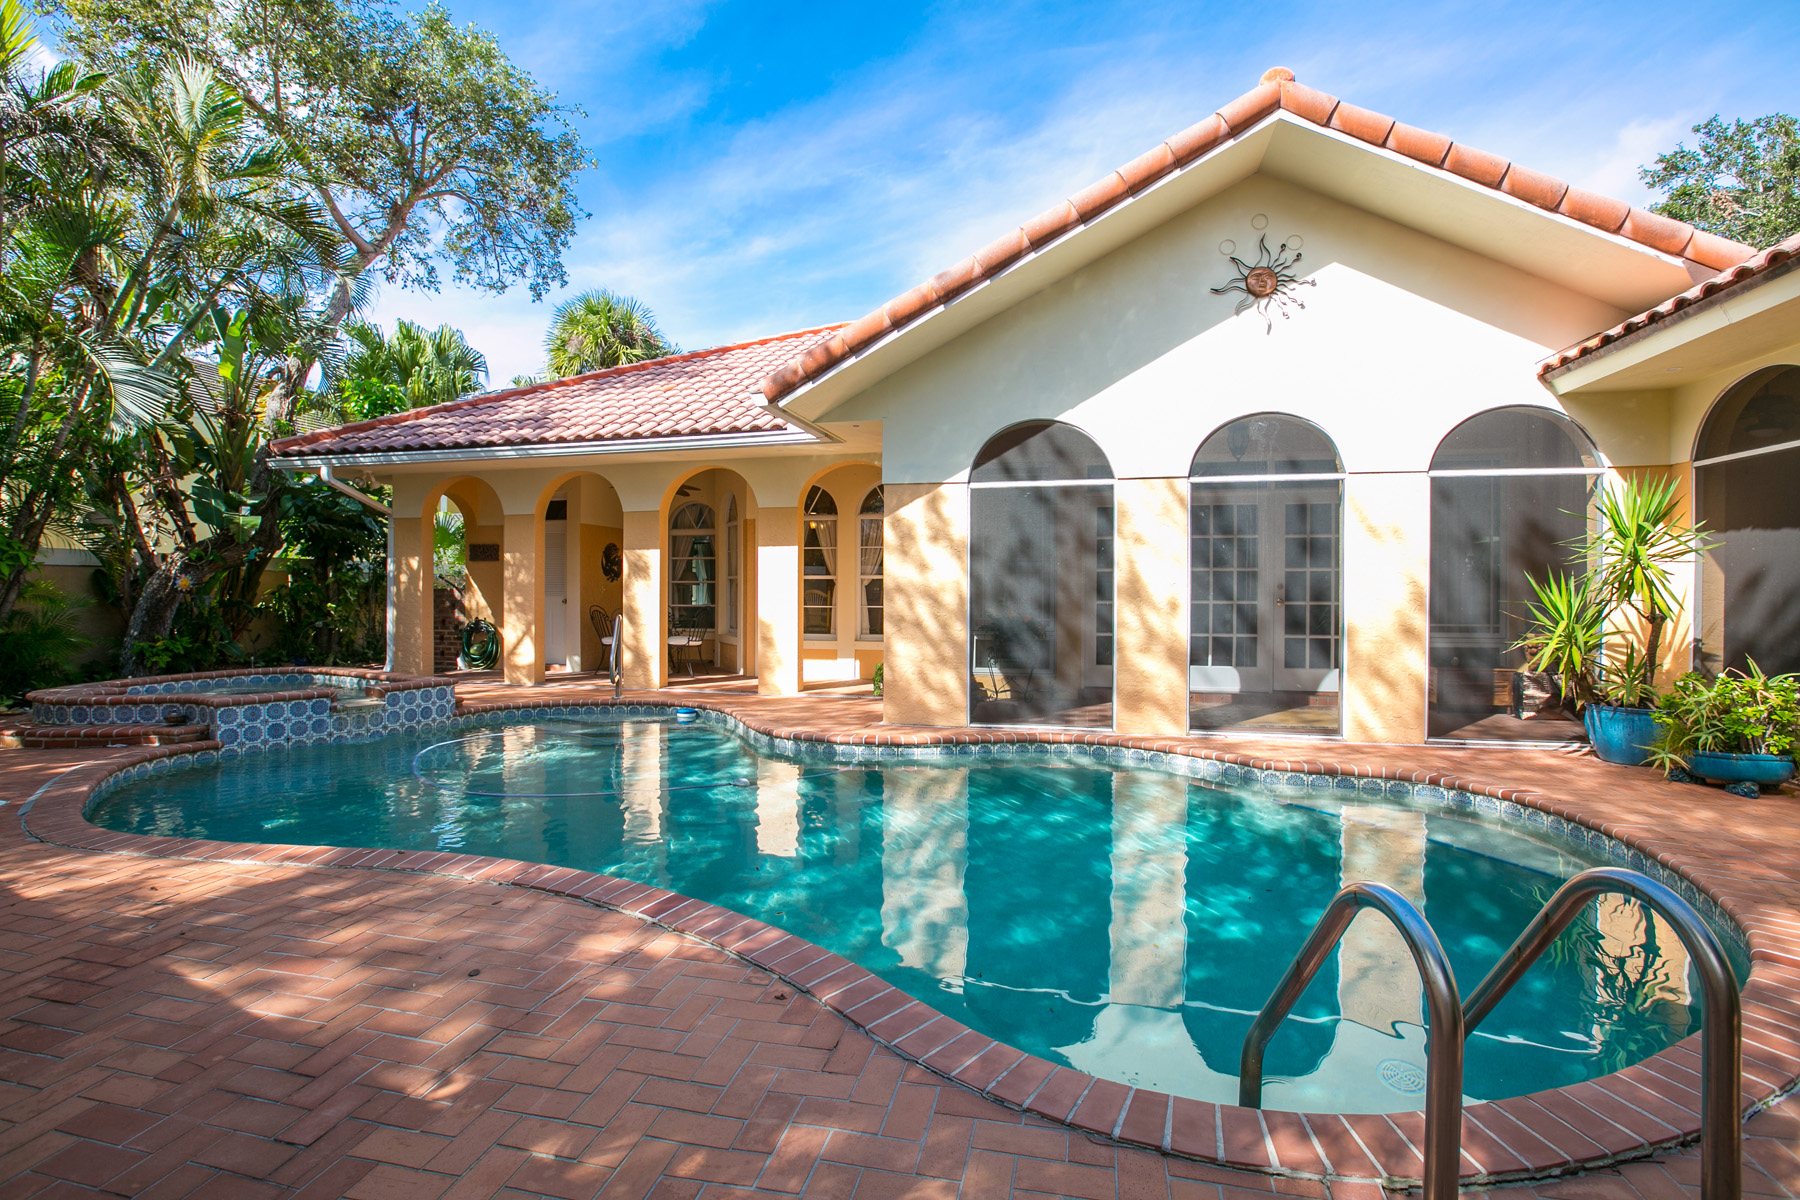 Vero Beach Real Estate Homes For Sale In Vero Beach Florida